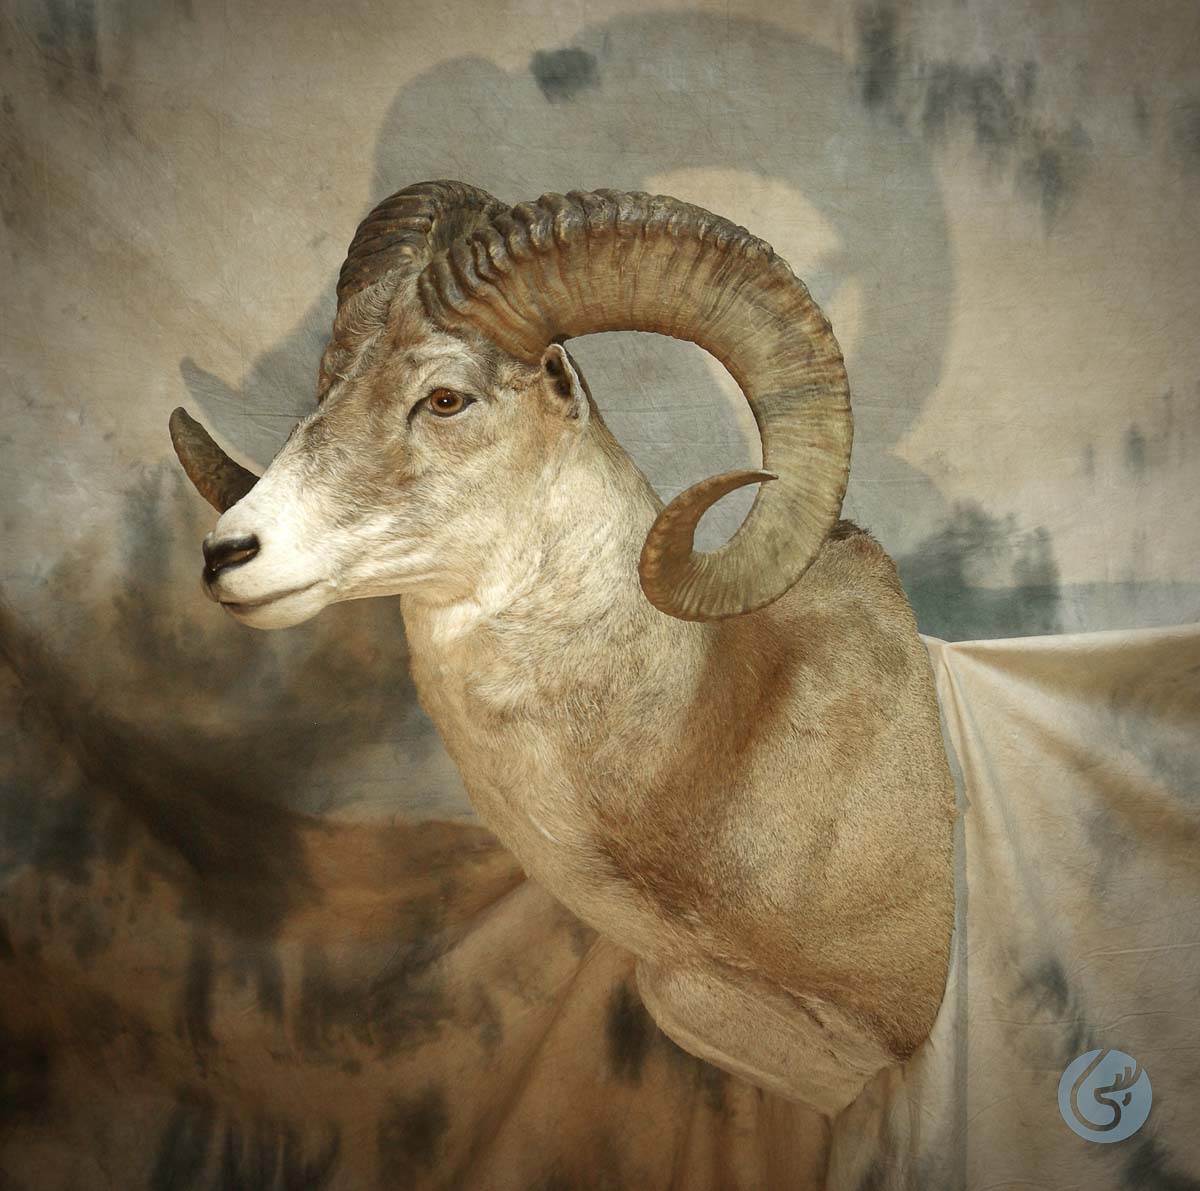 Ovce středoasijská Marco Polo - (Marco Polo sheep)